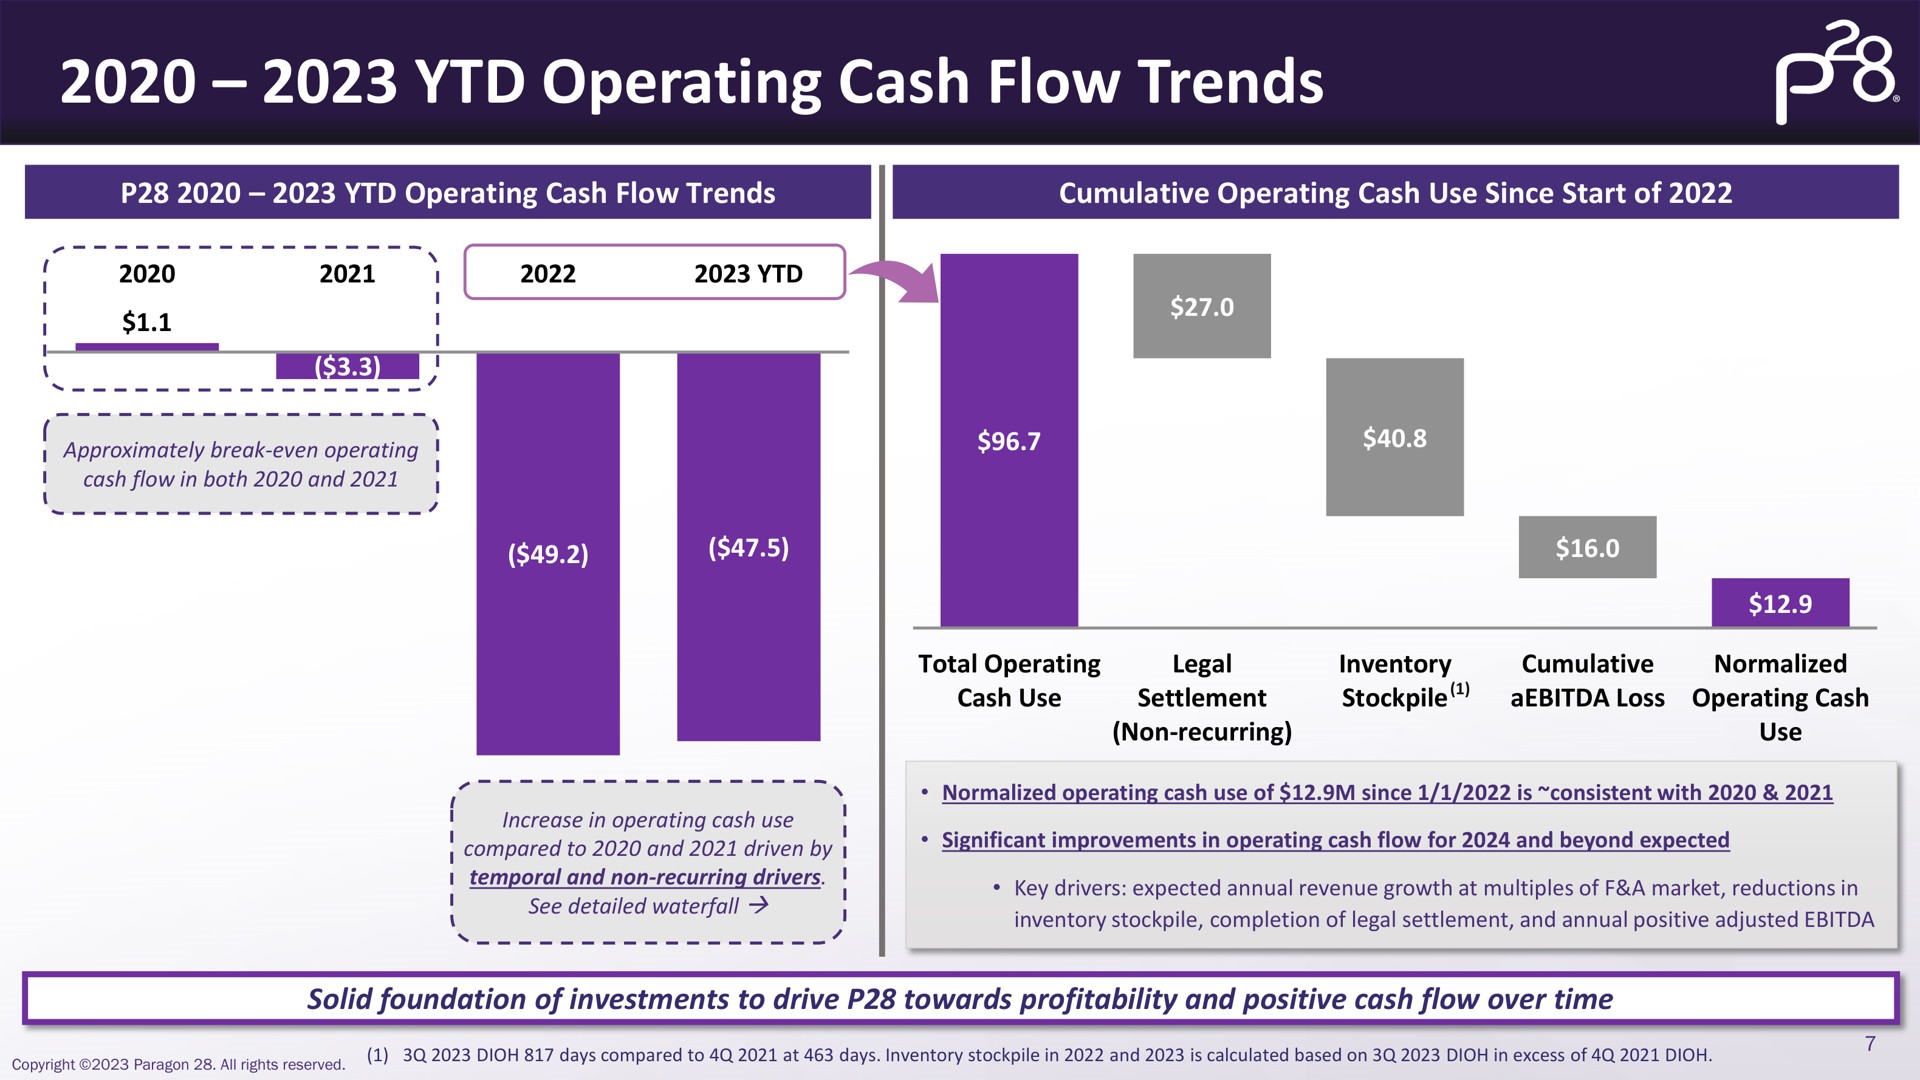 operating cash flow trends | Paragon28